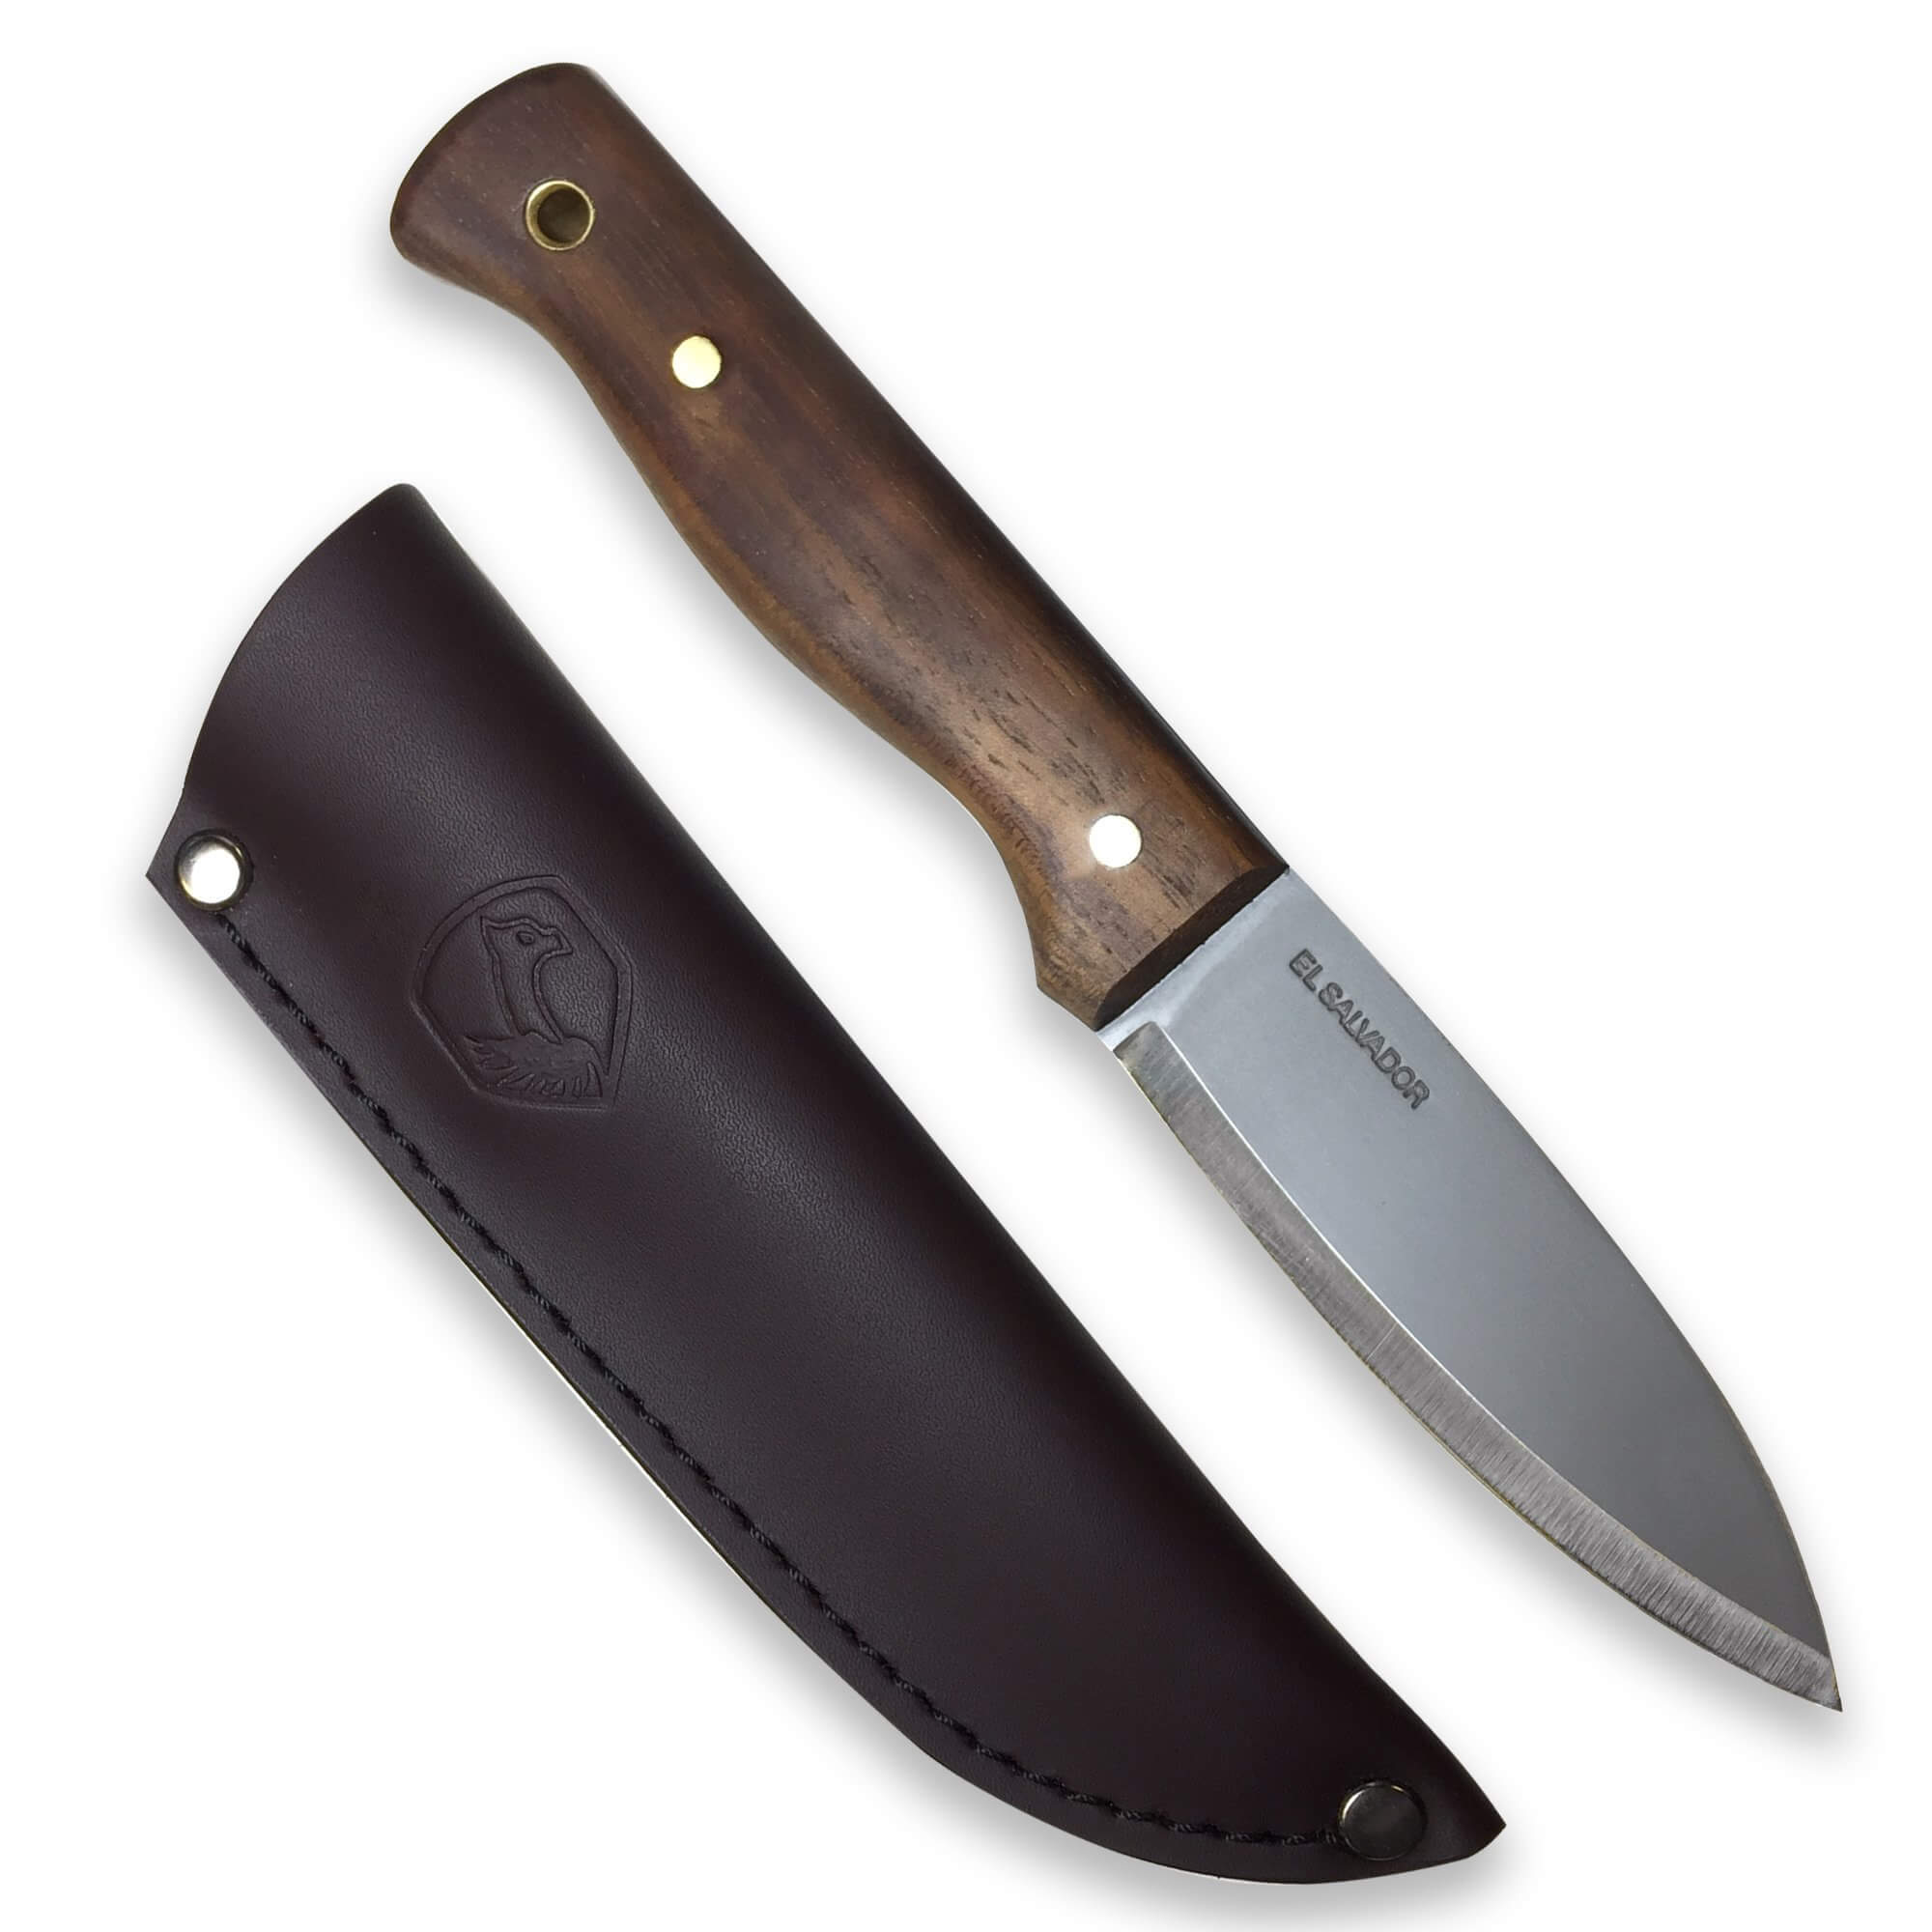 Condor Tool & Knife, Bushlore Camp Knife, best bushcraft knife under 100, best bushcraft knife 2020, bushcraft skills